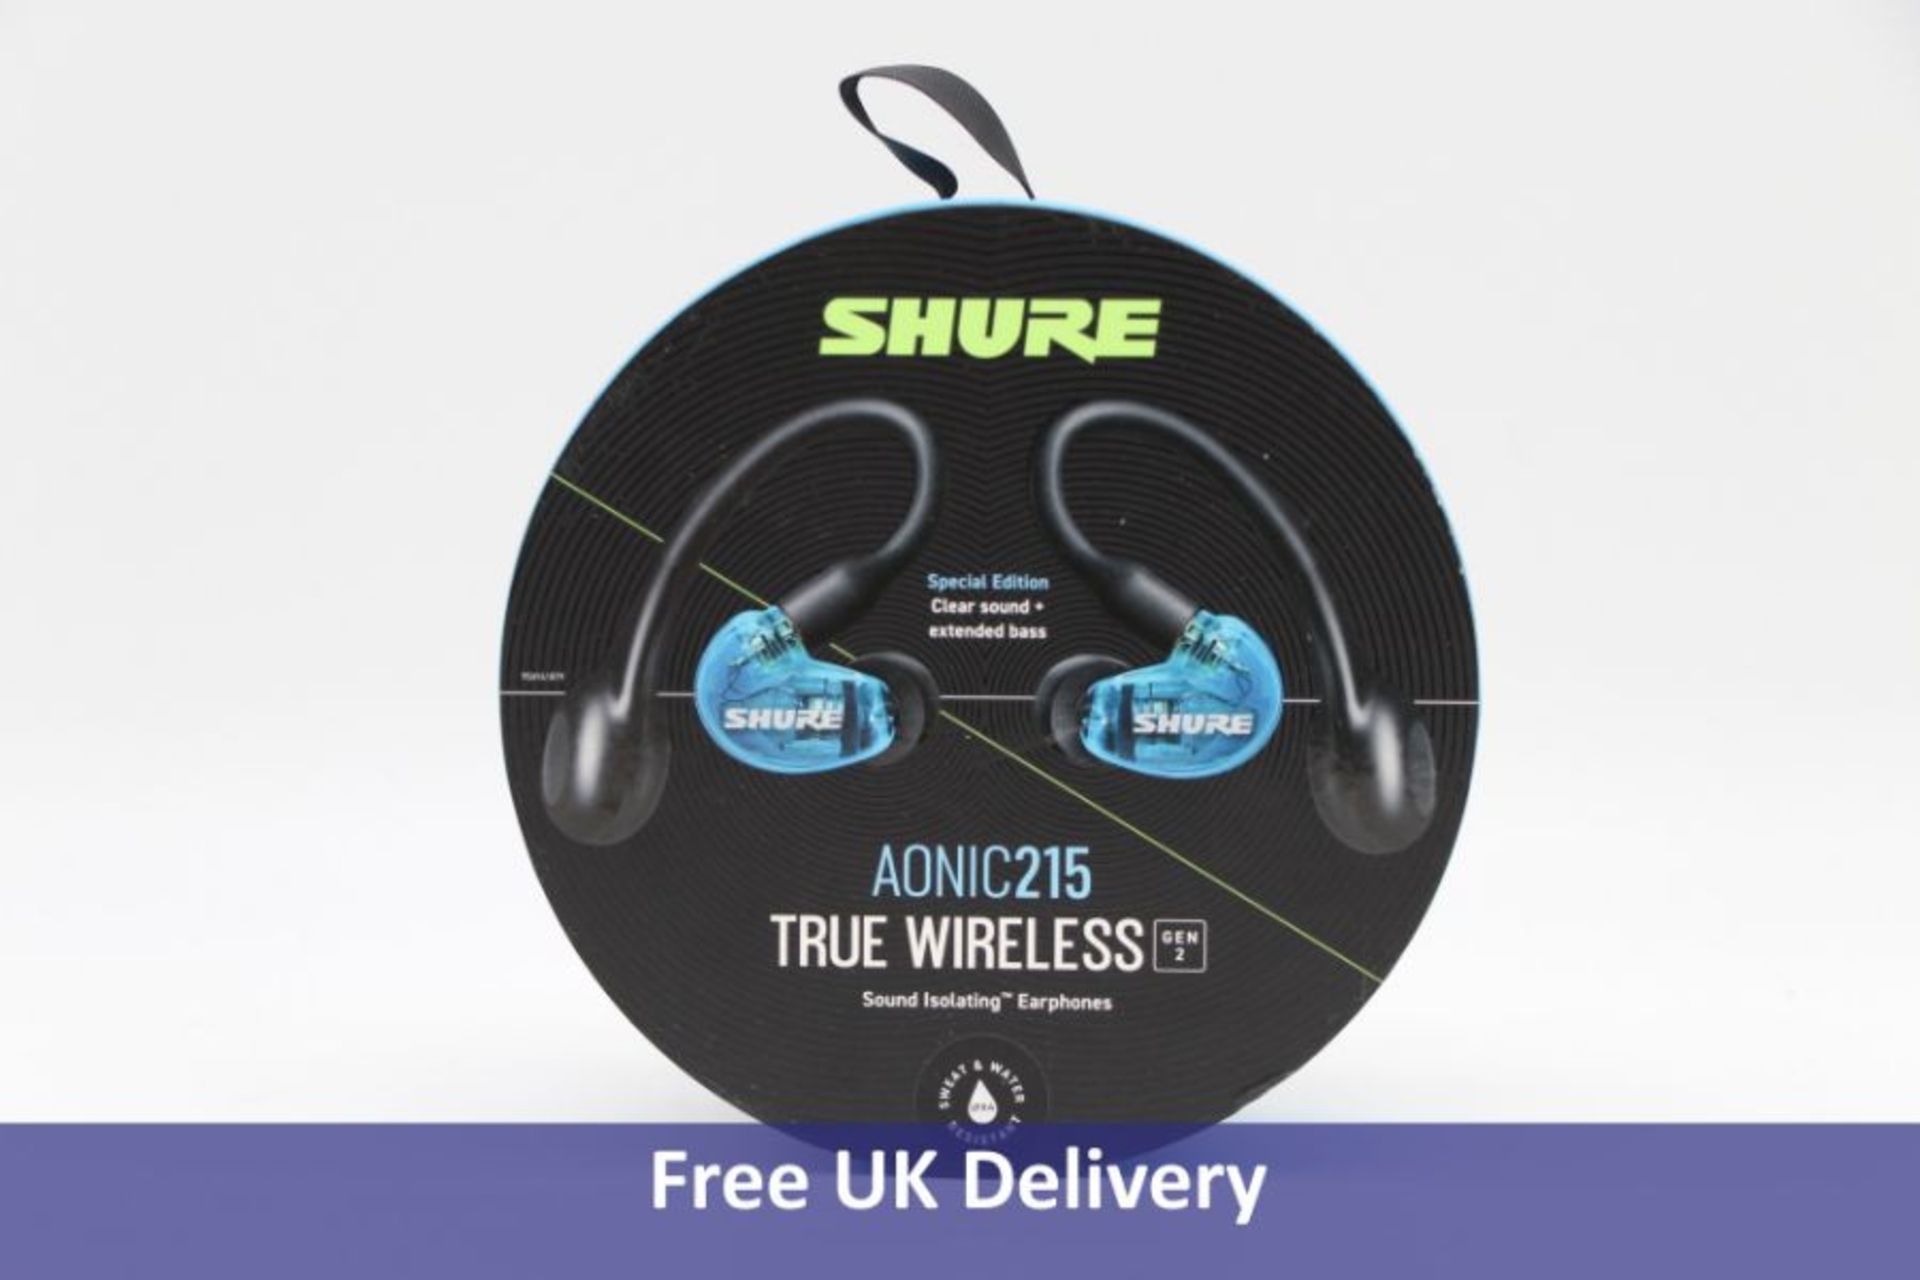 Three Shure A0nic215 True Wireless Earphones, Black/Blue - Image 3 of 3